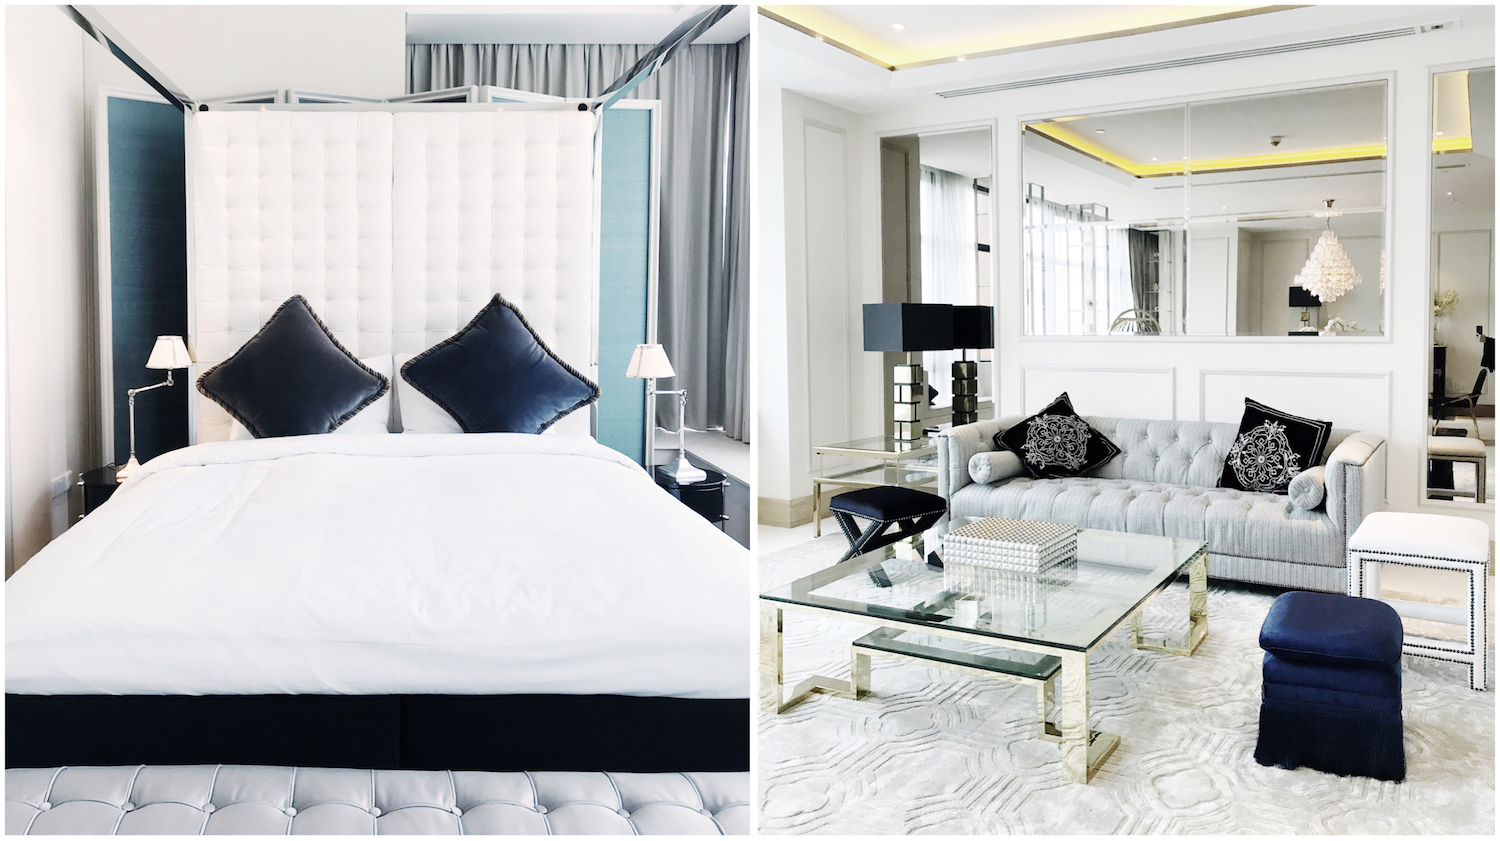 The Ritz-Carlton Residences Singapore by Roxanne Chia Realty